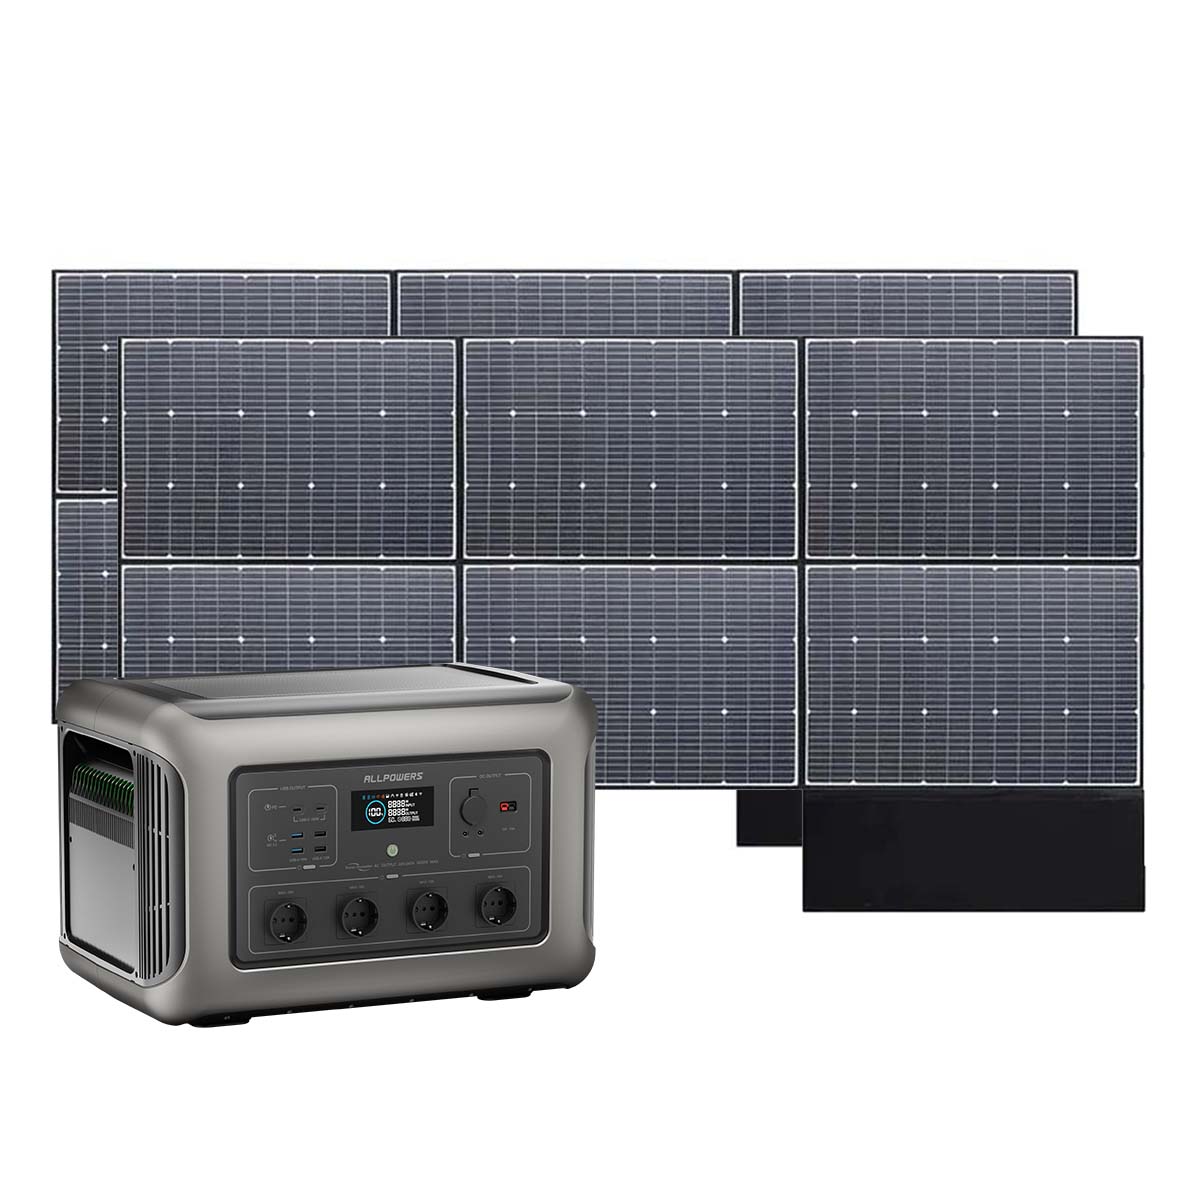 ALLPOWERS Solar Generator Kit 3500W (R3500 + SP039 600W Solar Panel with Monocrystalline Cell) 